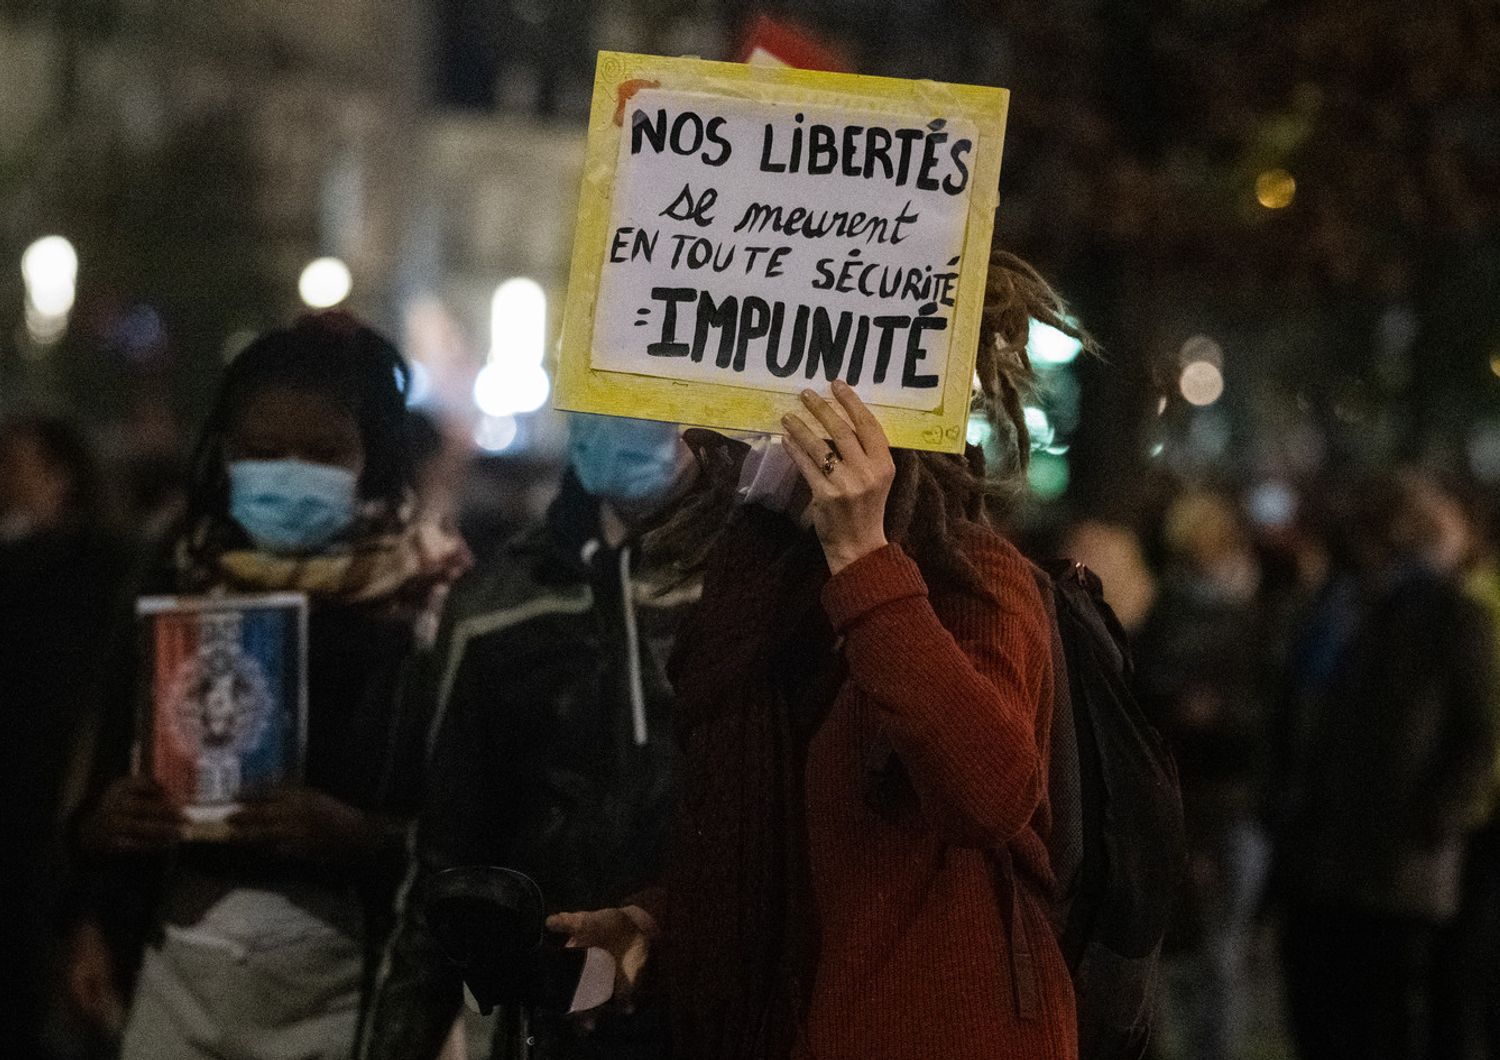 Francia agenti pestano nero disarmato&nbsp;Macron&nbsp;vergogna